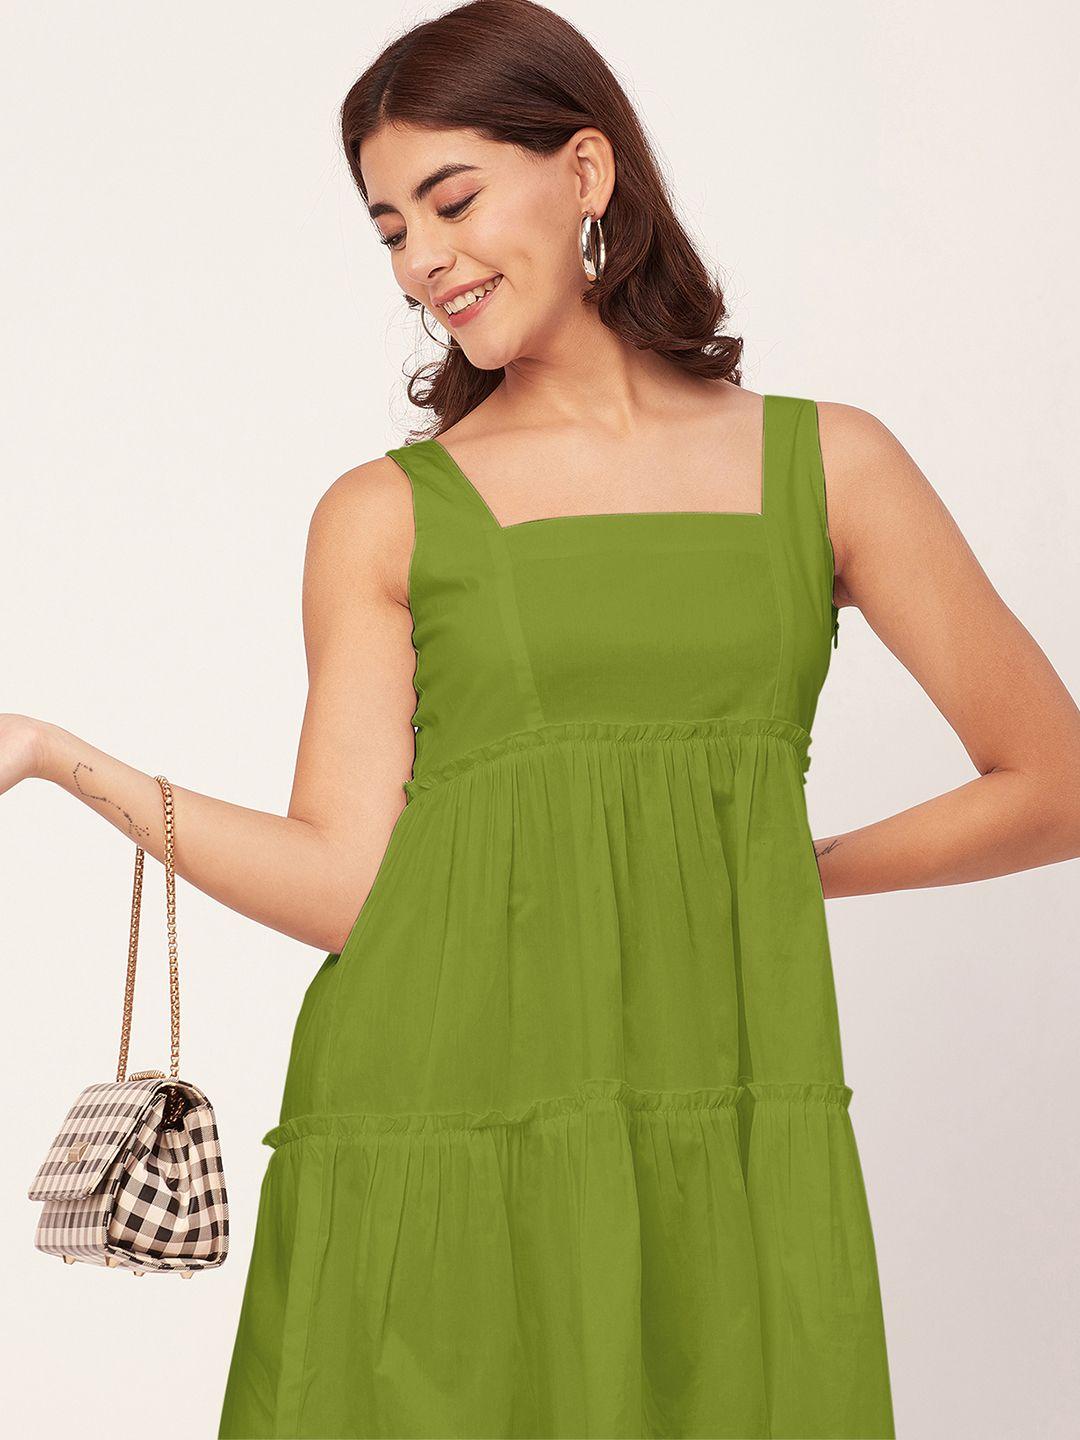 moomaya green fit & flare dress